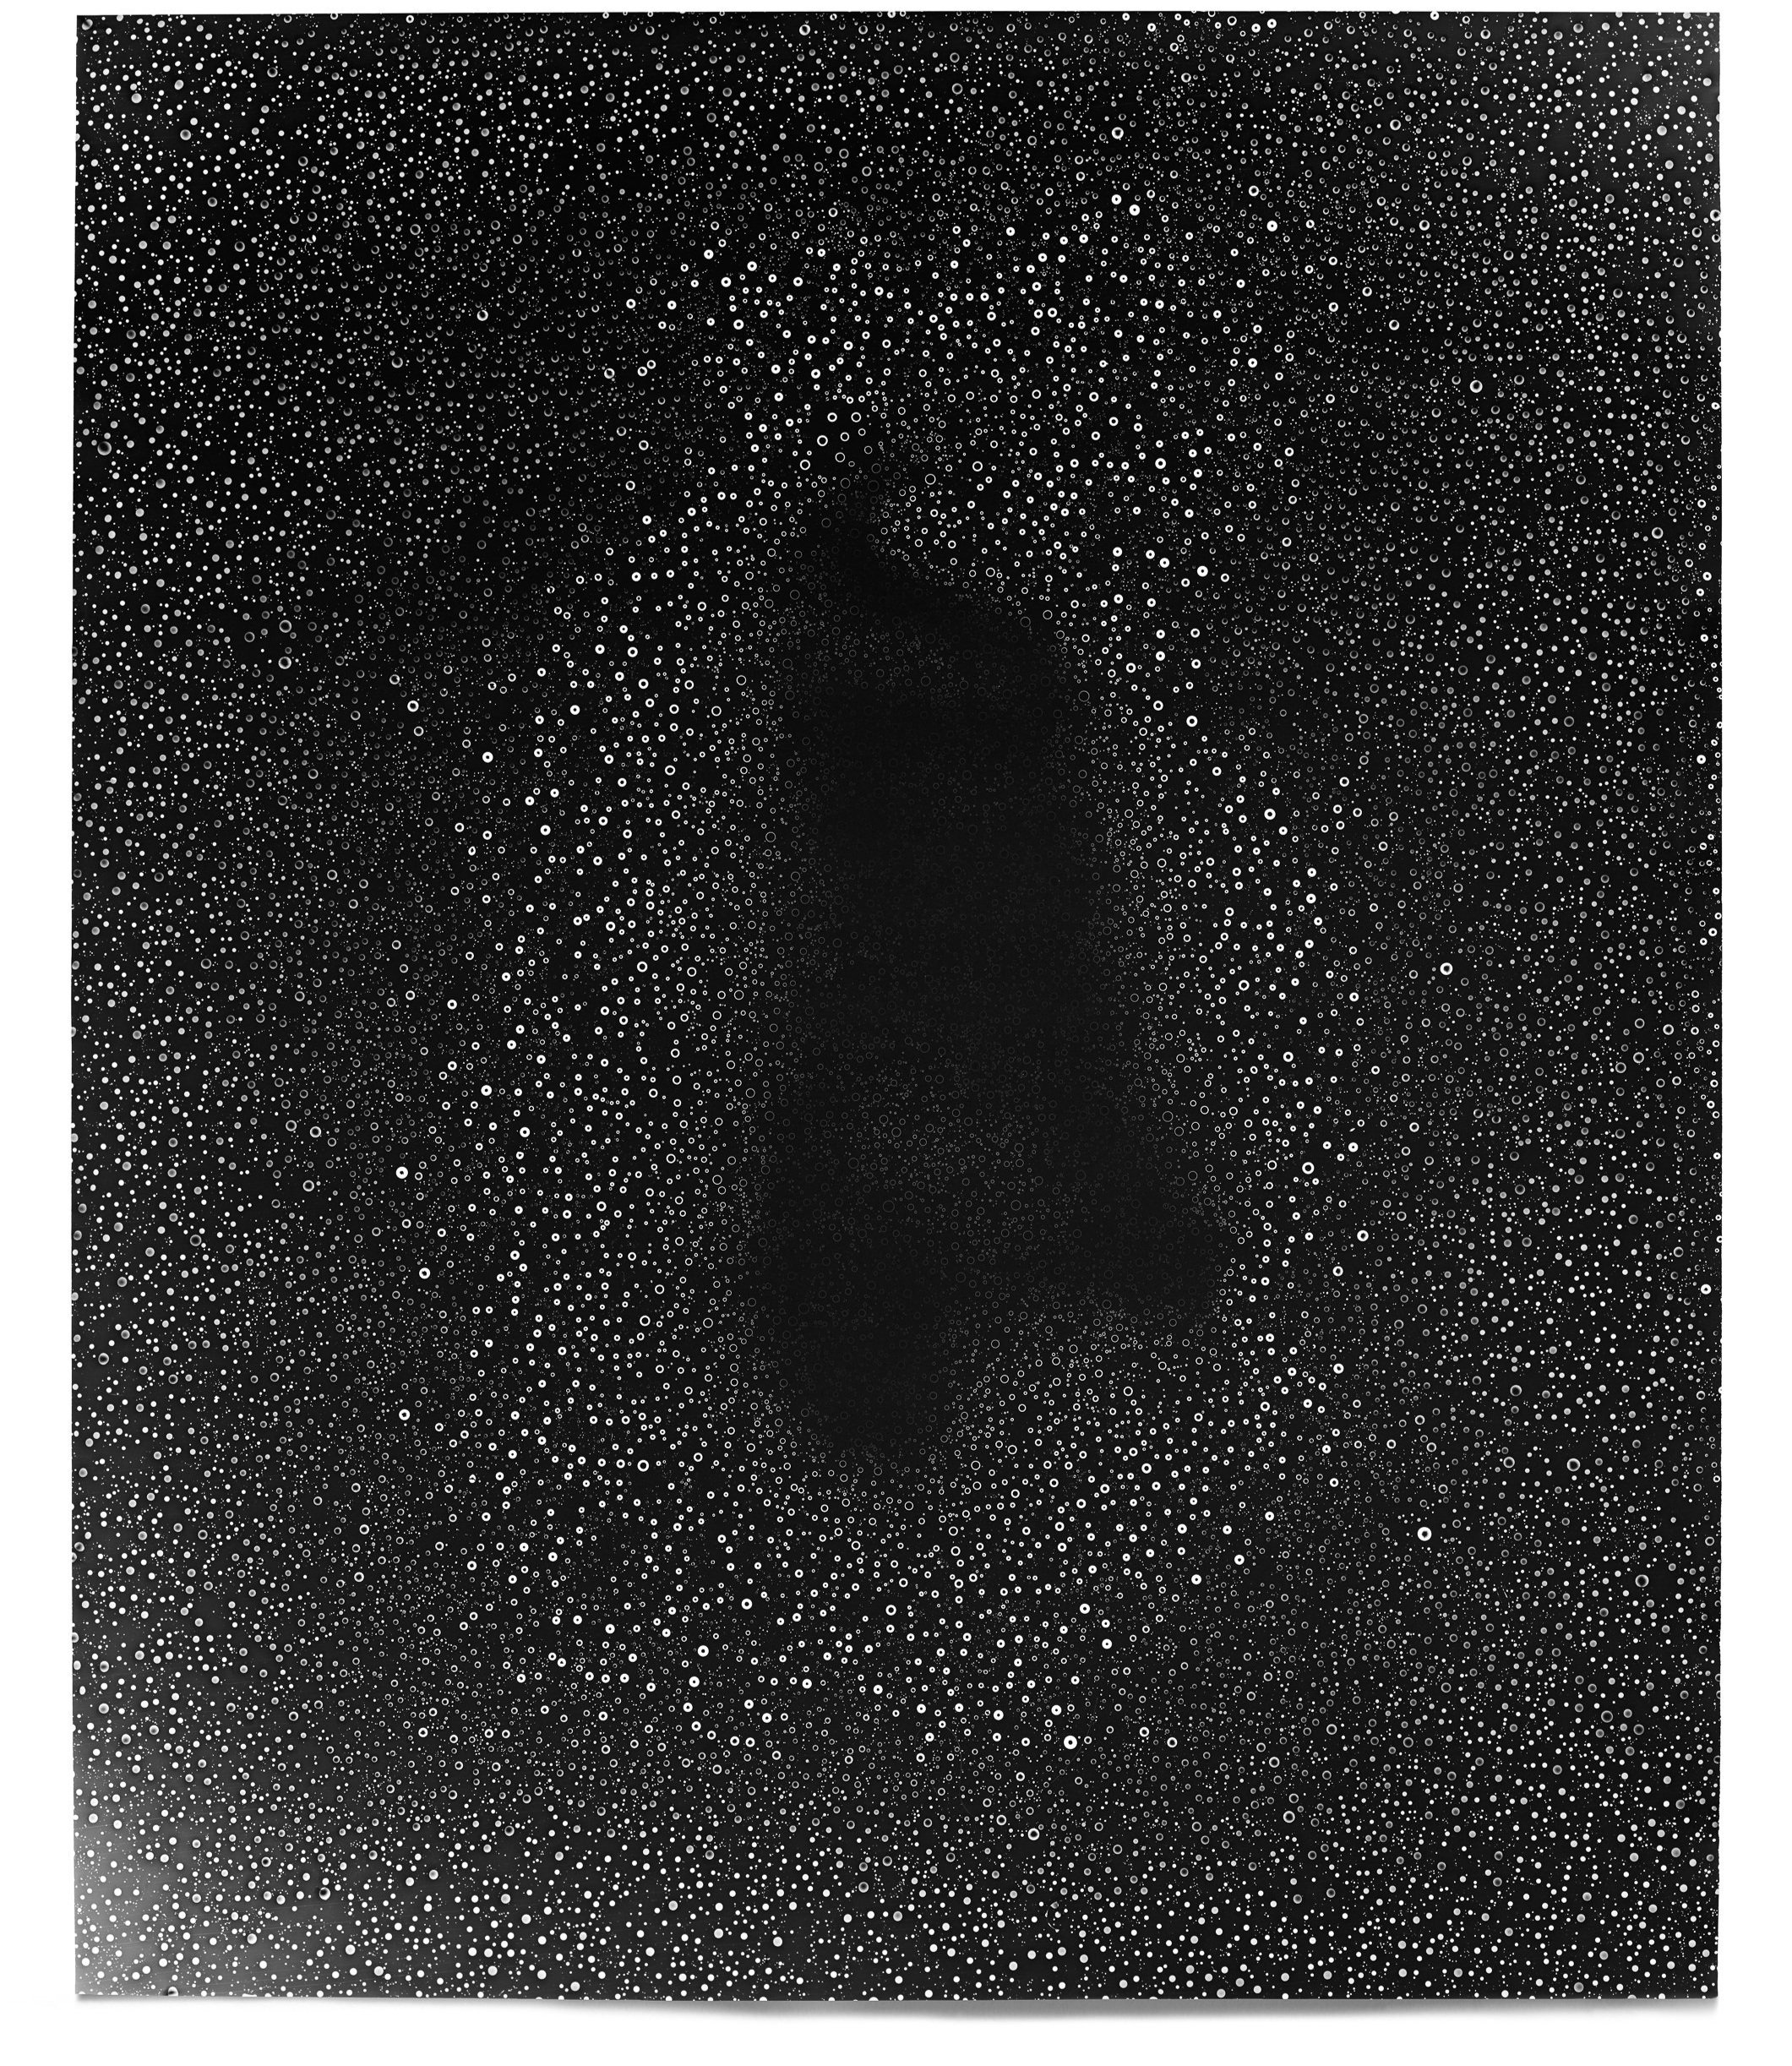   Rainstorm 22,  2014 Silver gelatin photogram 42 x 34 in 